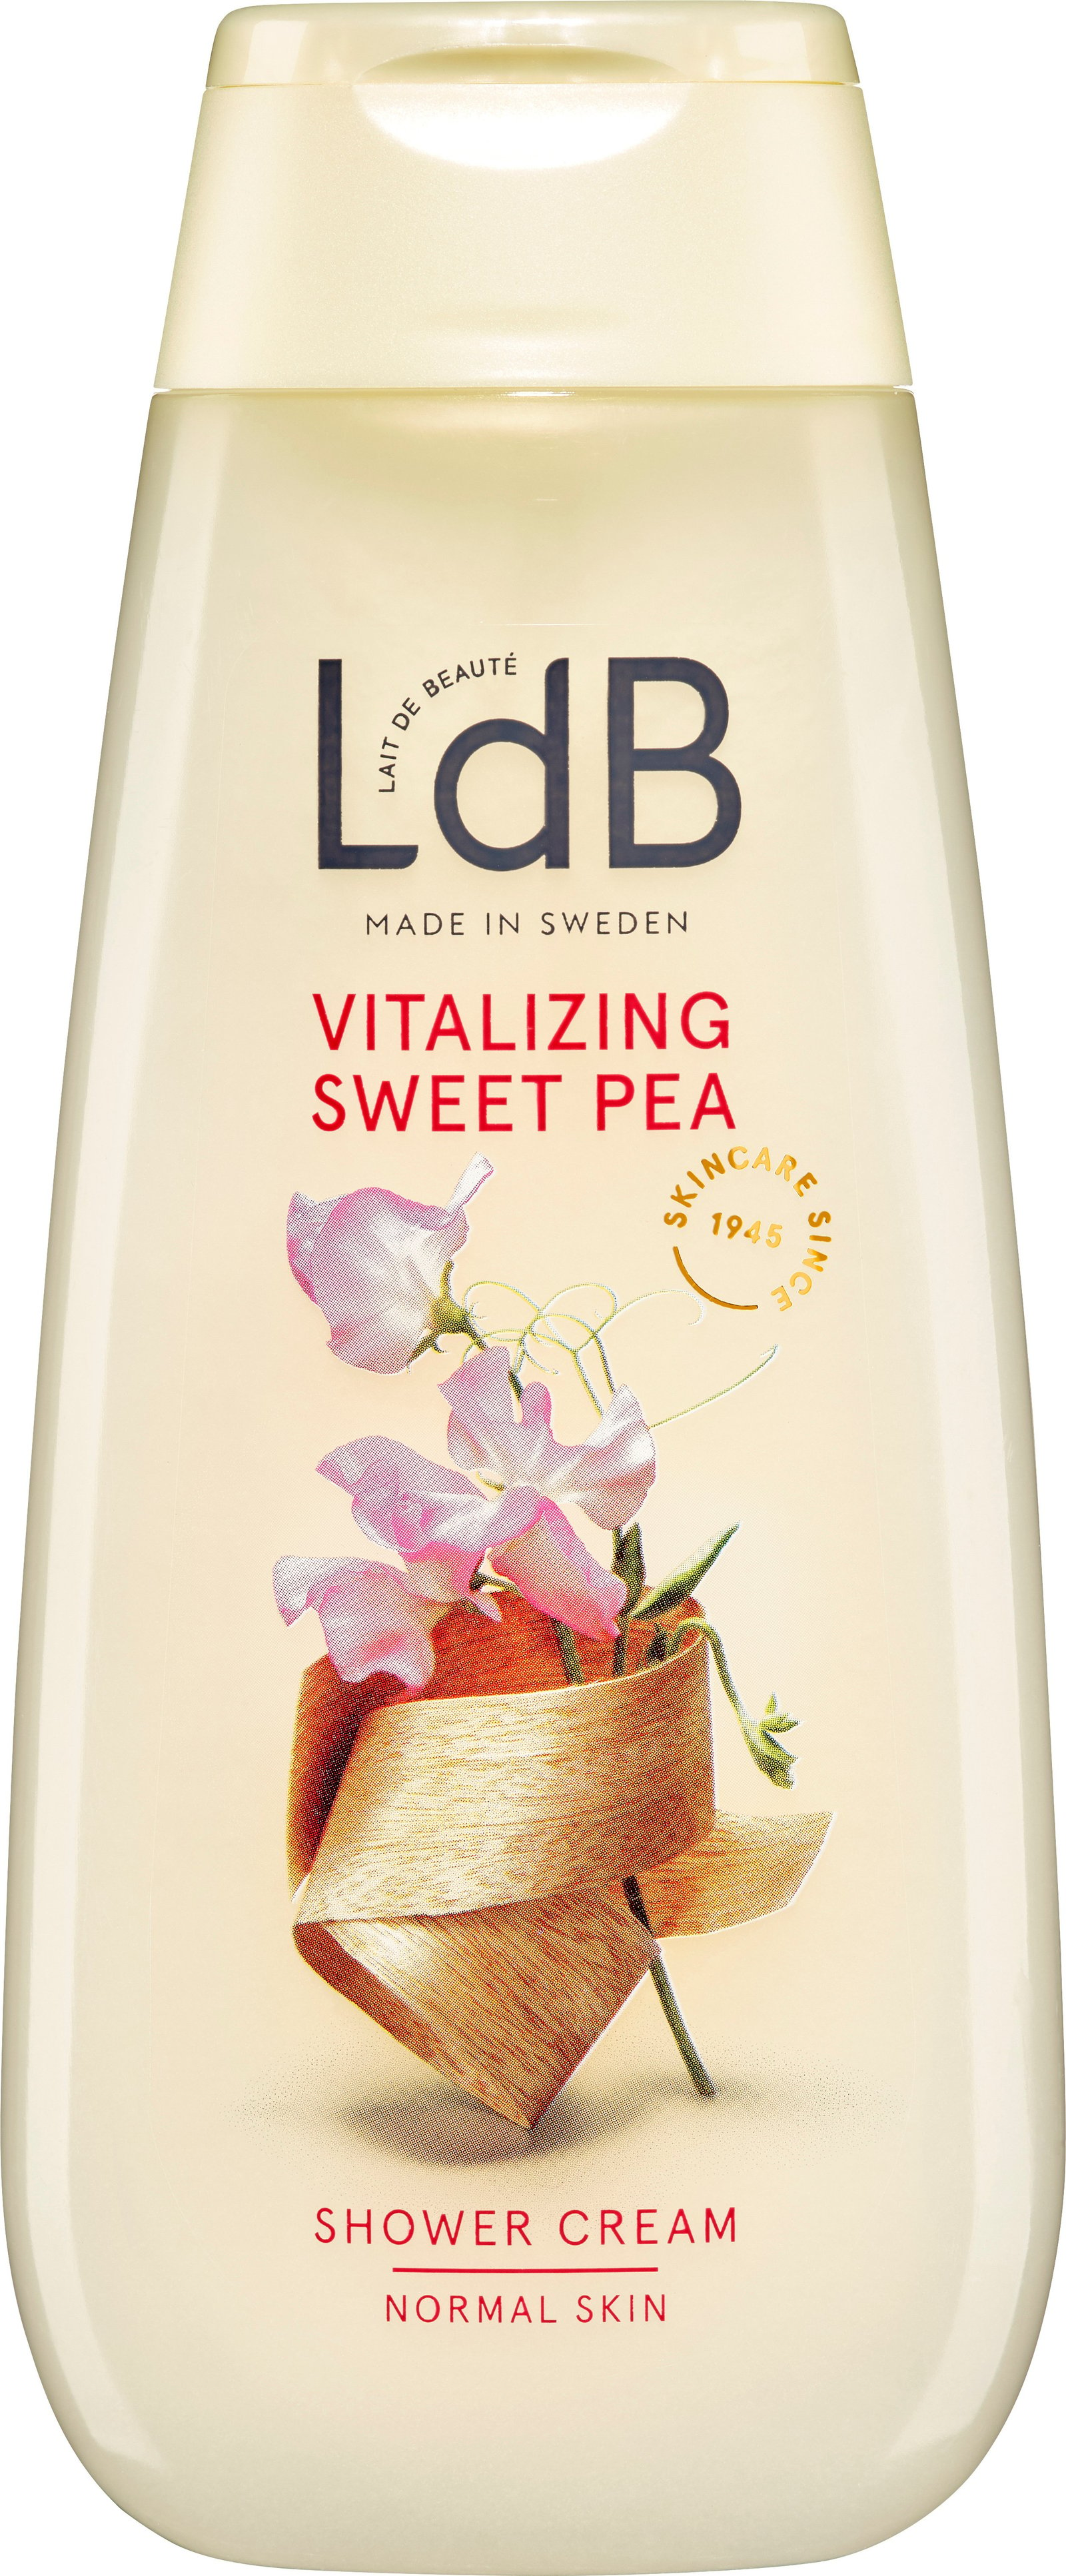 LdB Shower Cream Vitalizing Sweet Pea 250ML